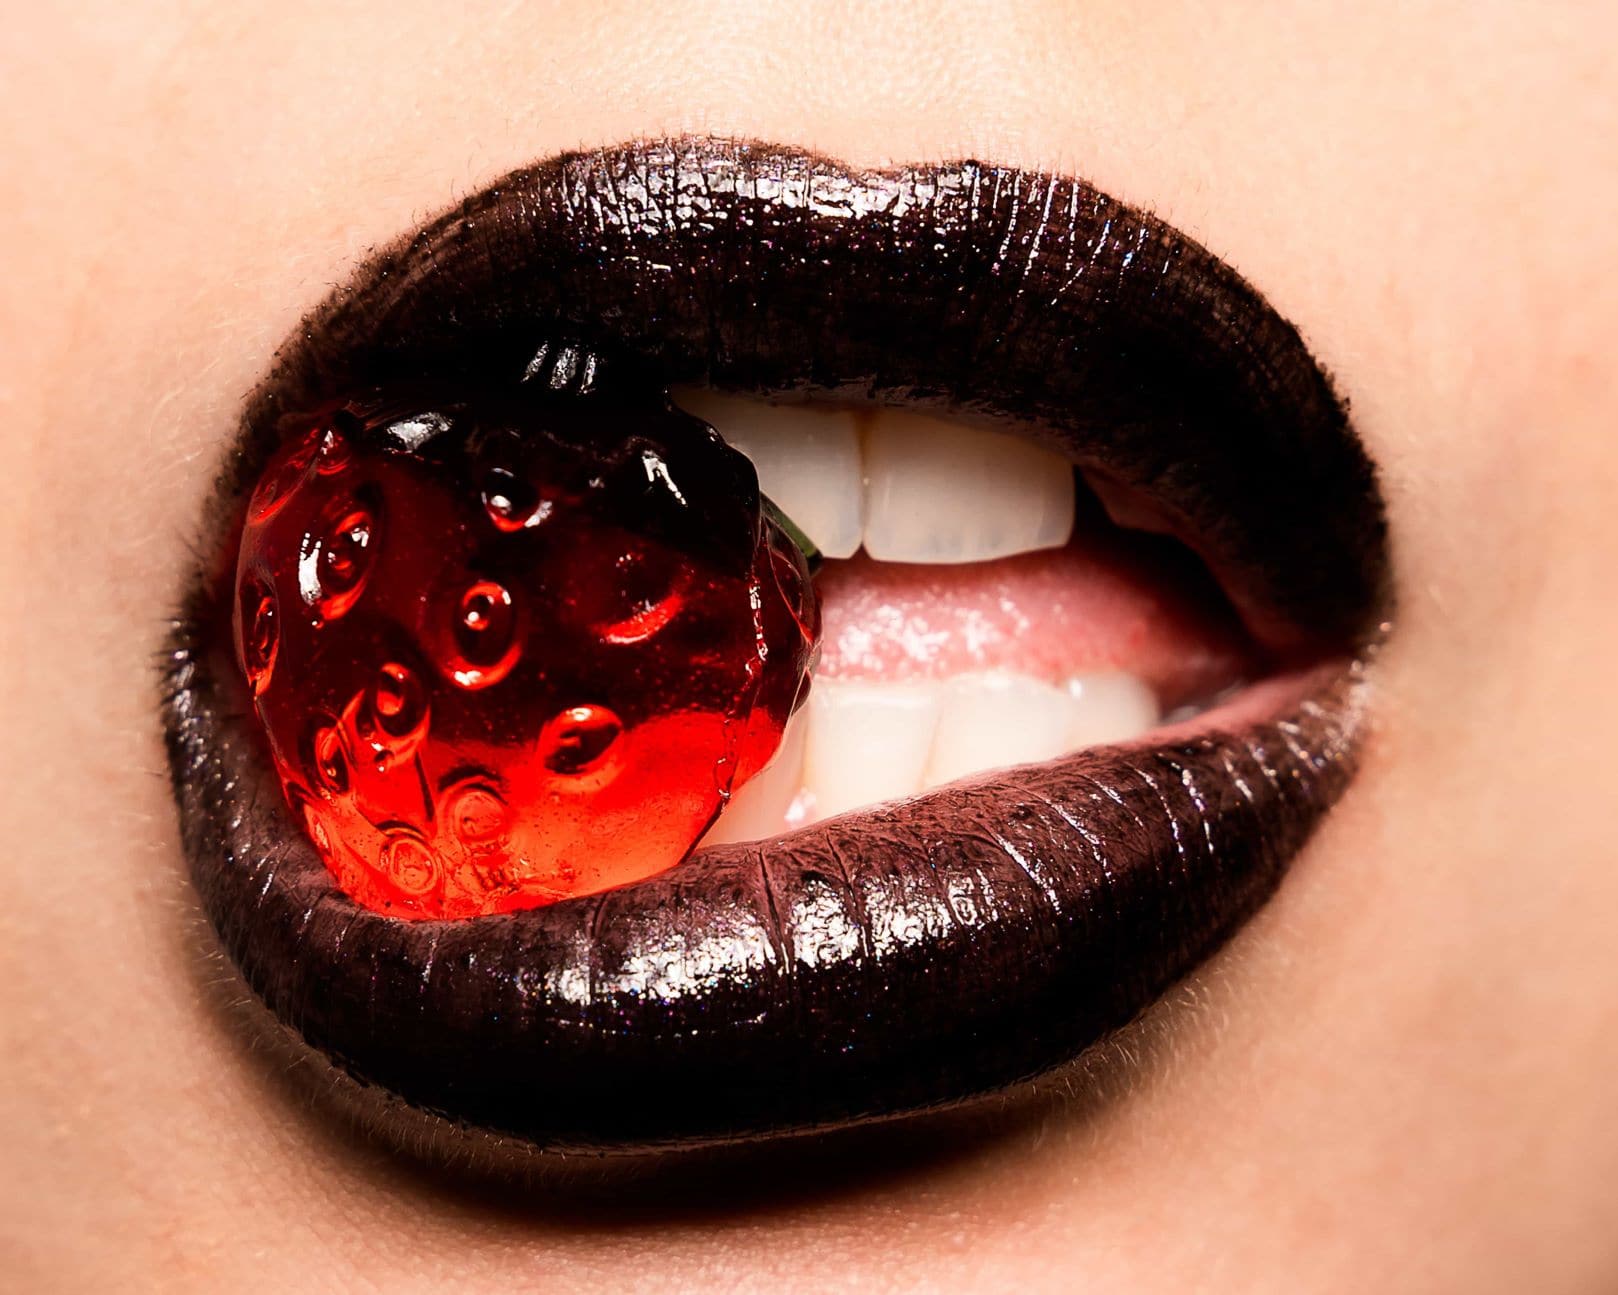 Fruit, makeup, tiktok, sustainable, alternative, trend, lips